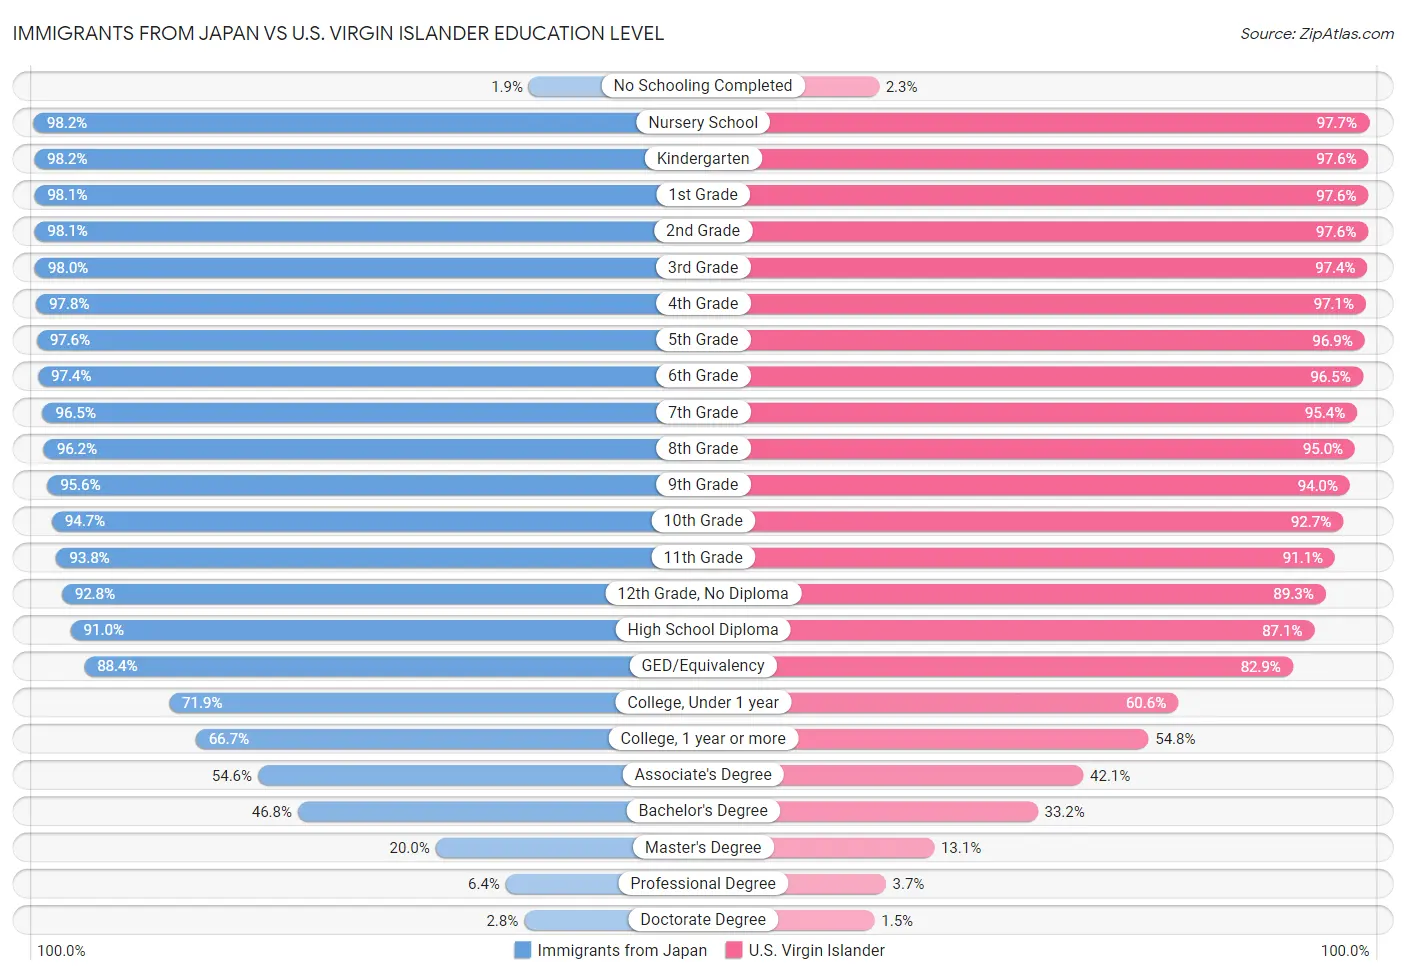 Immigrants from Japan vs U.S. Virgin Islander Education Level